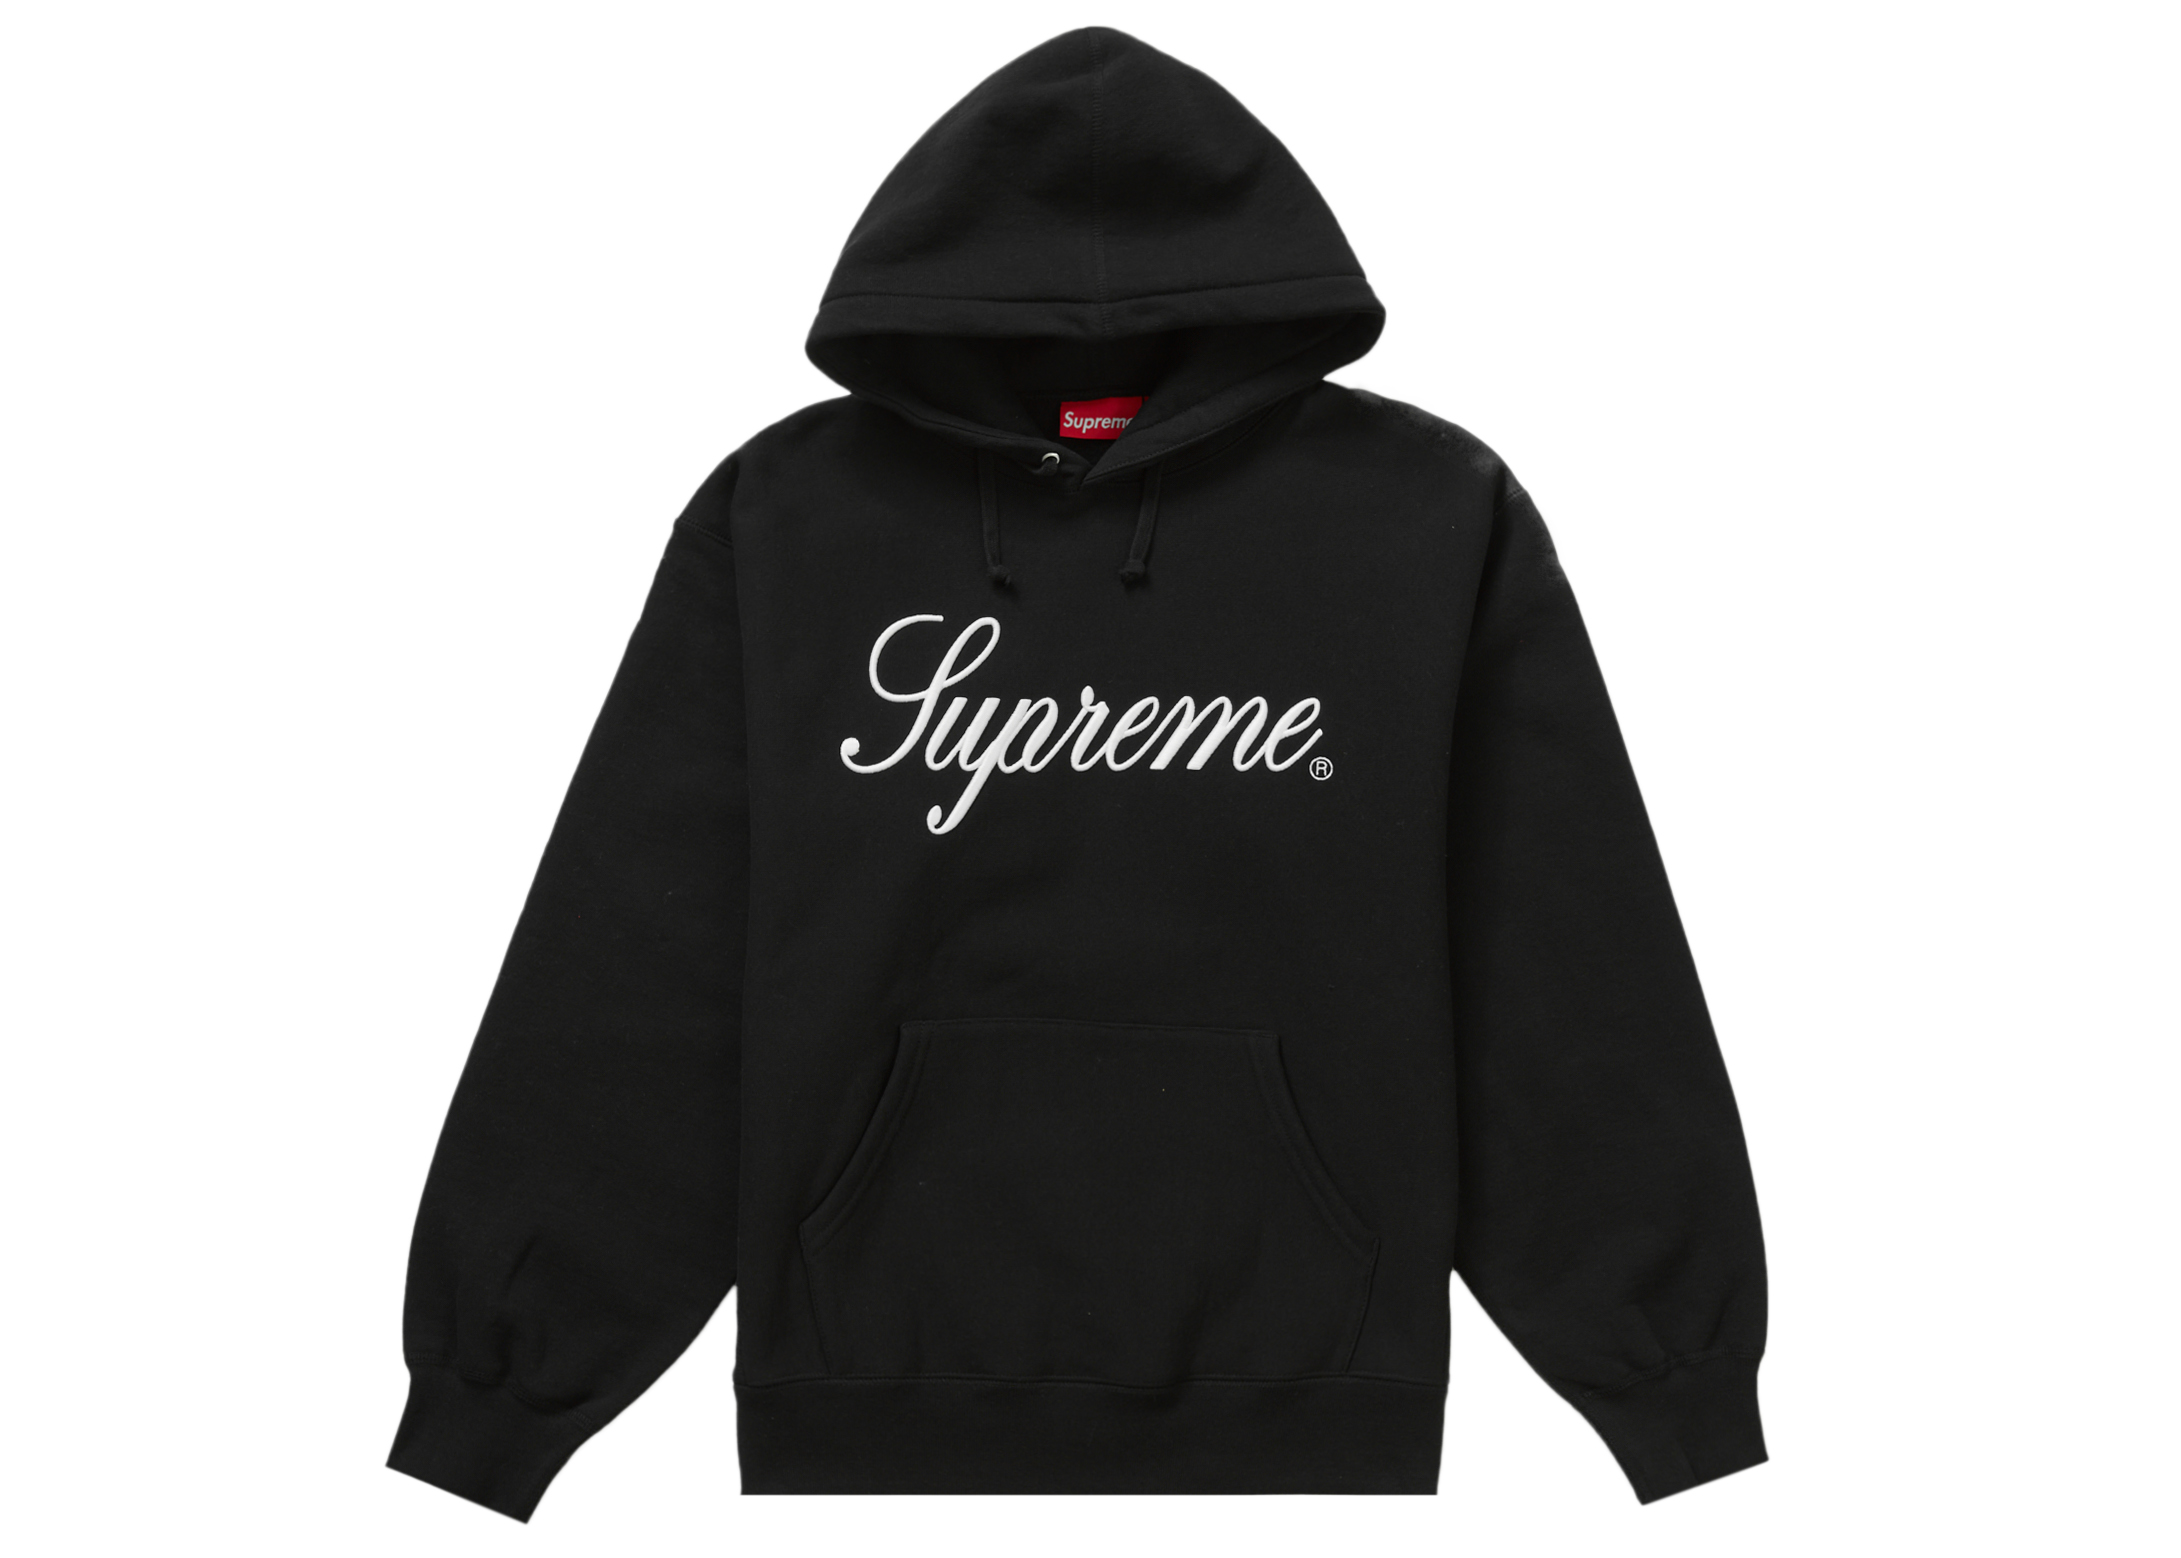 Supreme Raised Script Hooded Sweatshirt Black